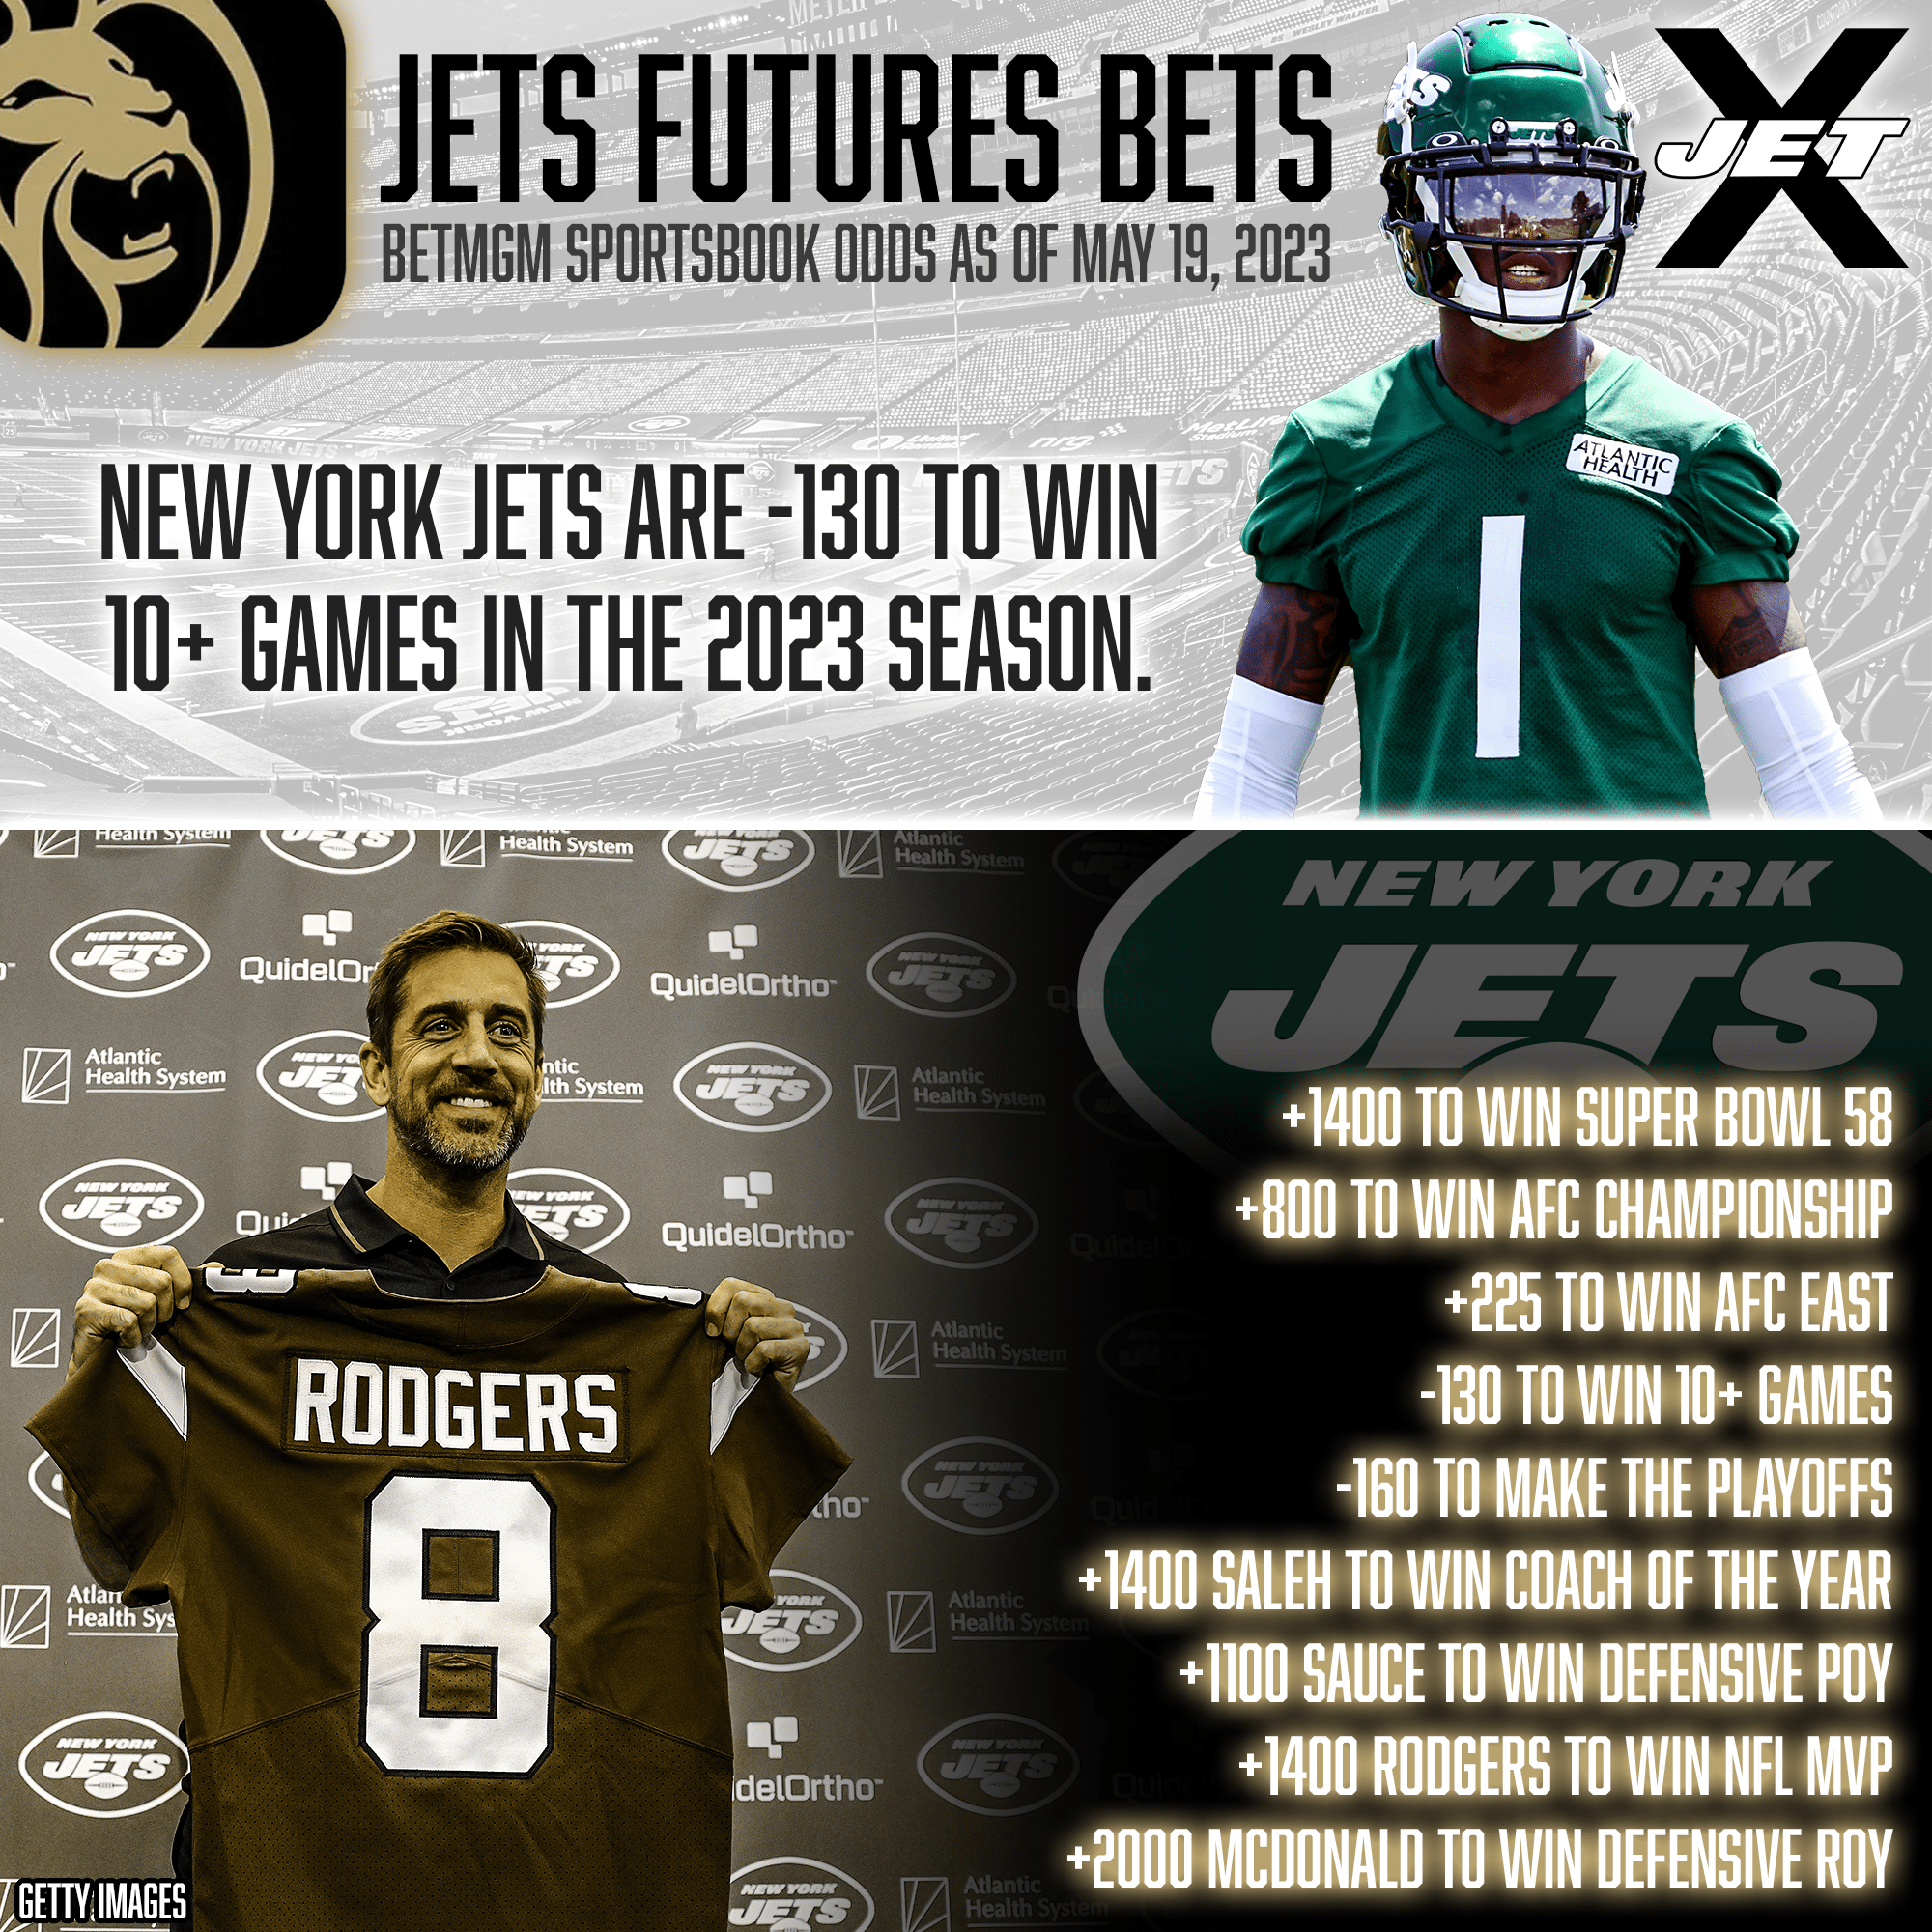 BetMGM Sportsbook, New York Jets Futures Odds